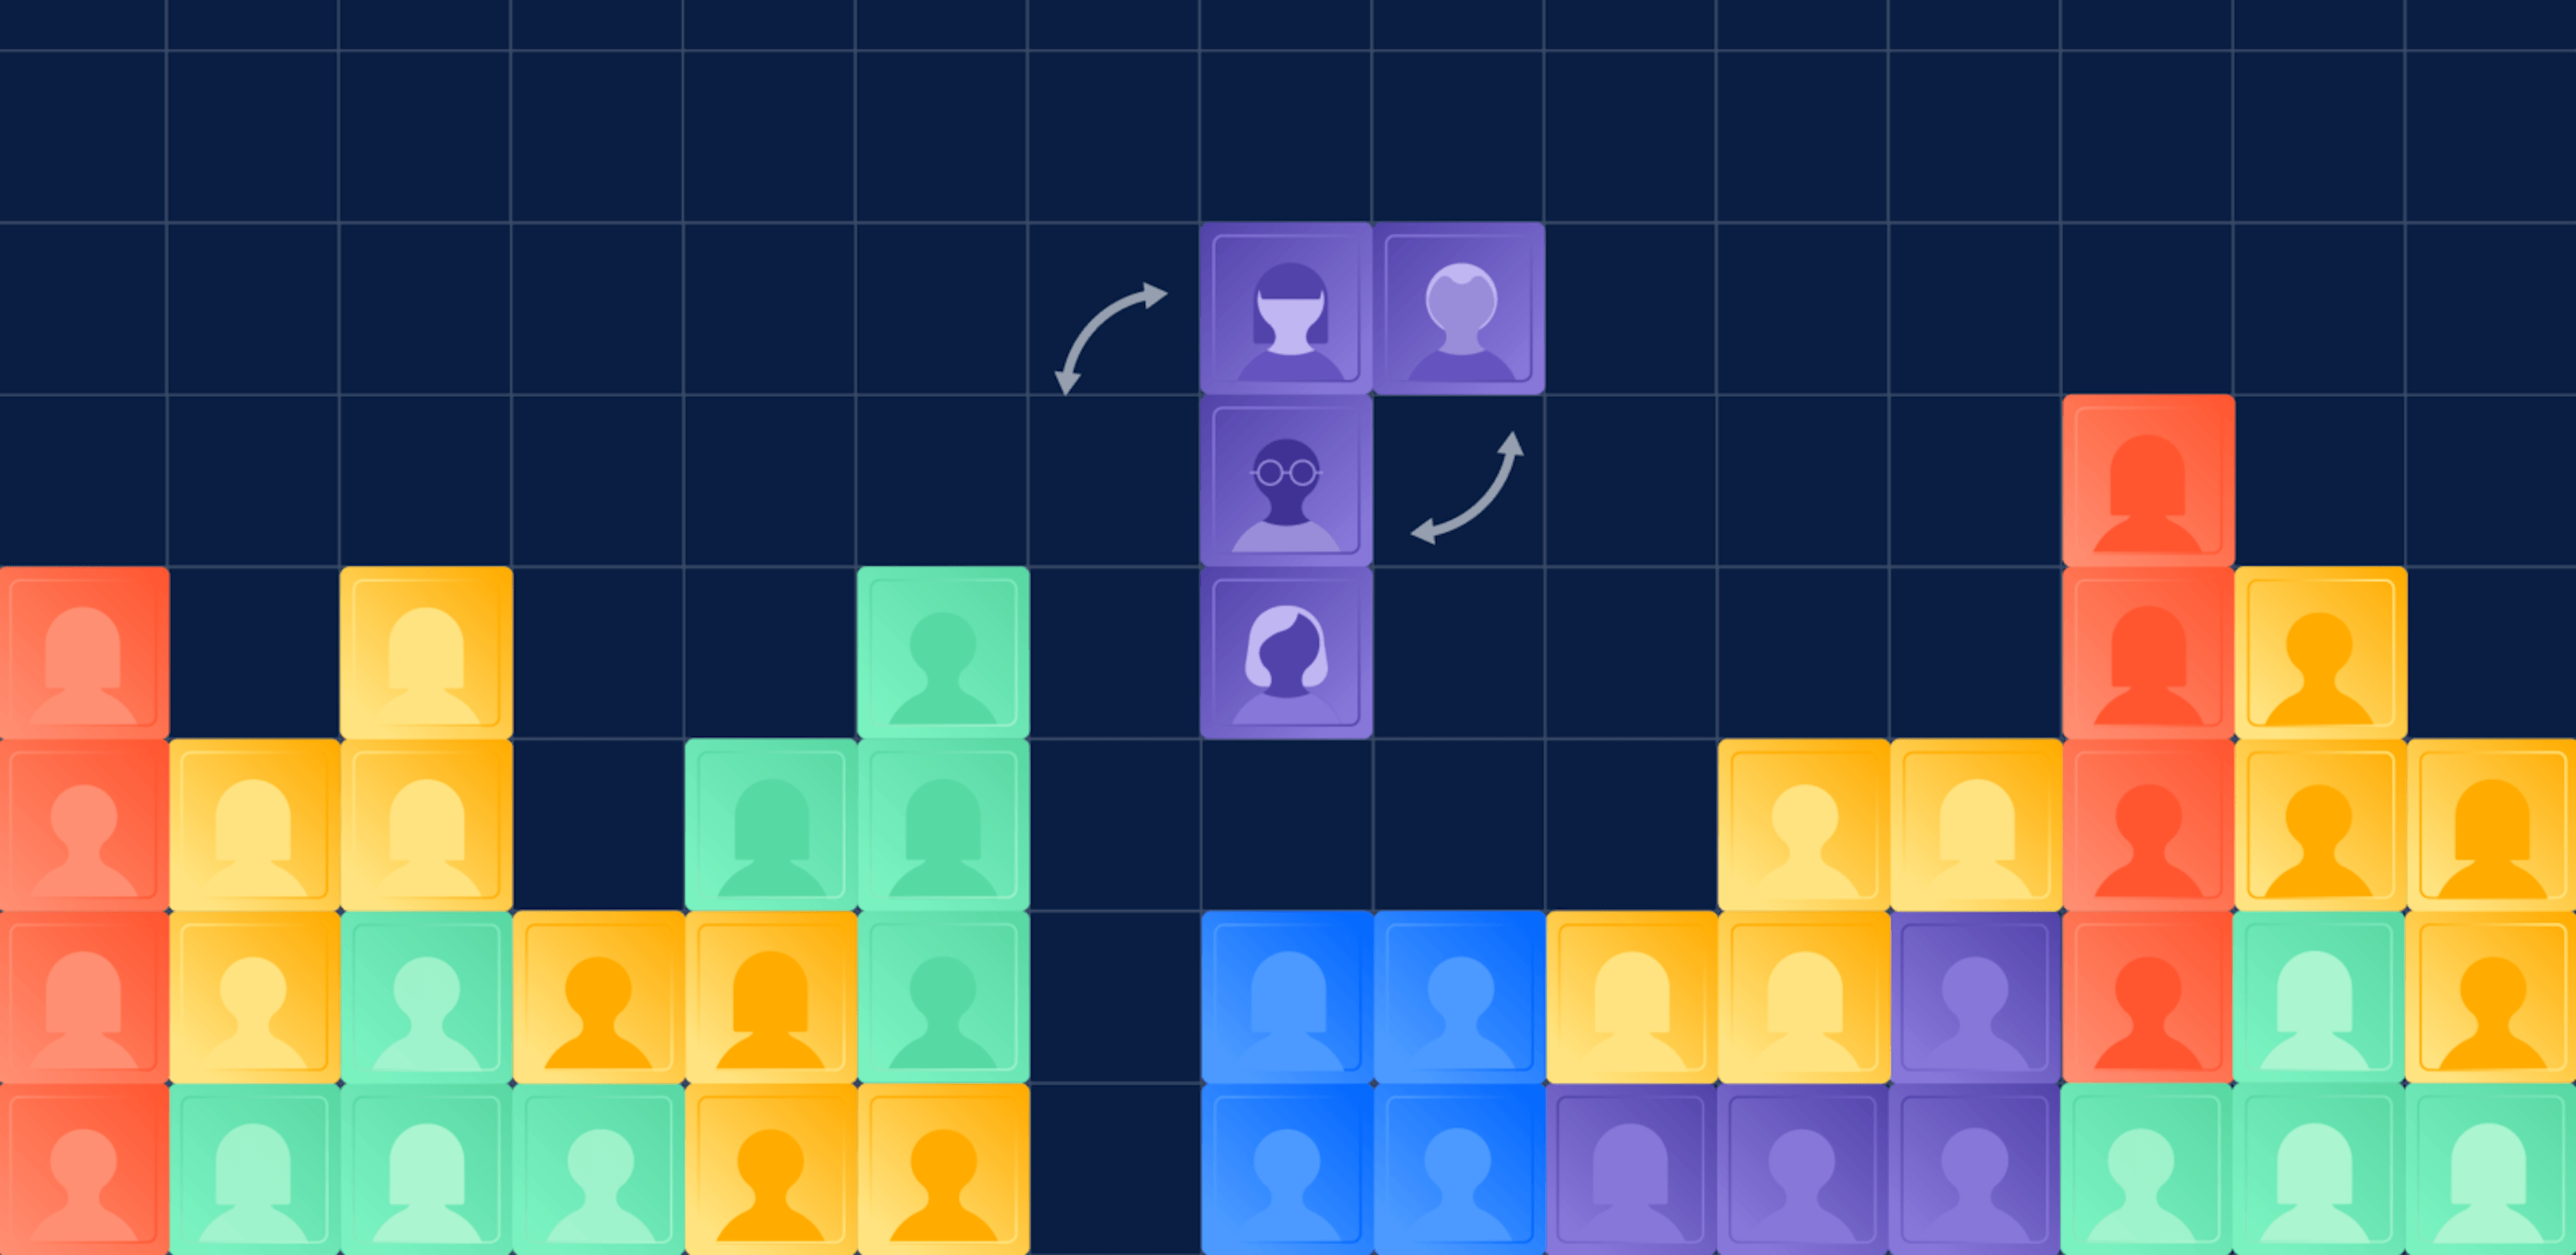 Illustration of tetris blocks containing headshots